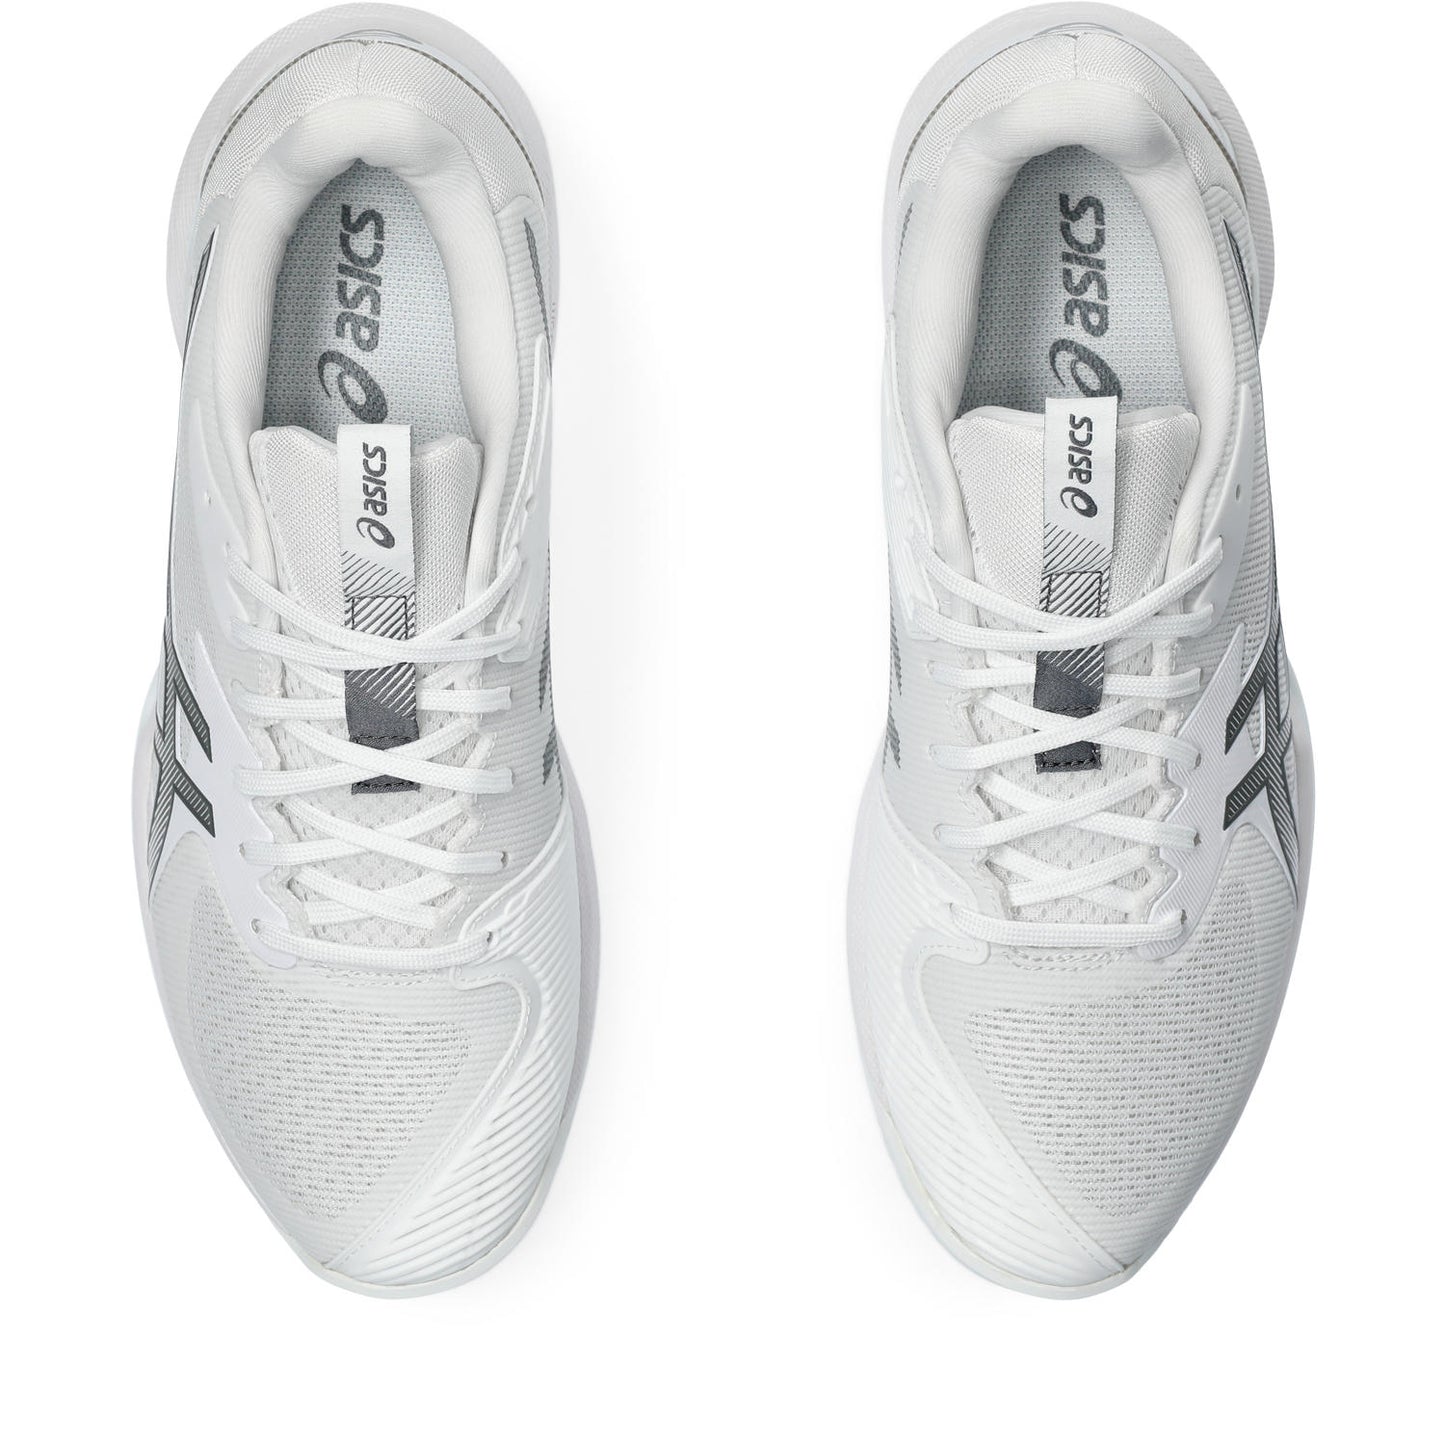 Asics Solution Speed FF women's tennis shoes 250.101 White/Metropolis